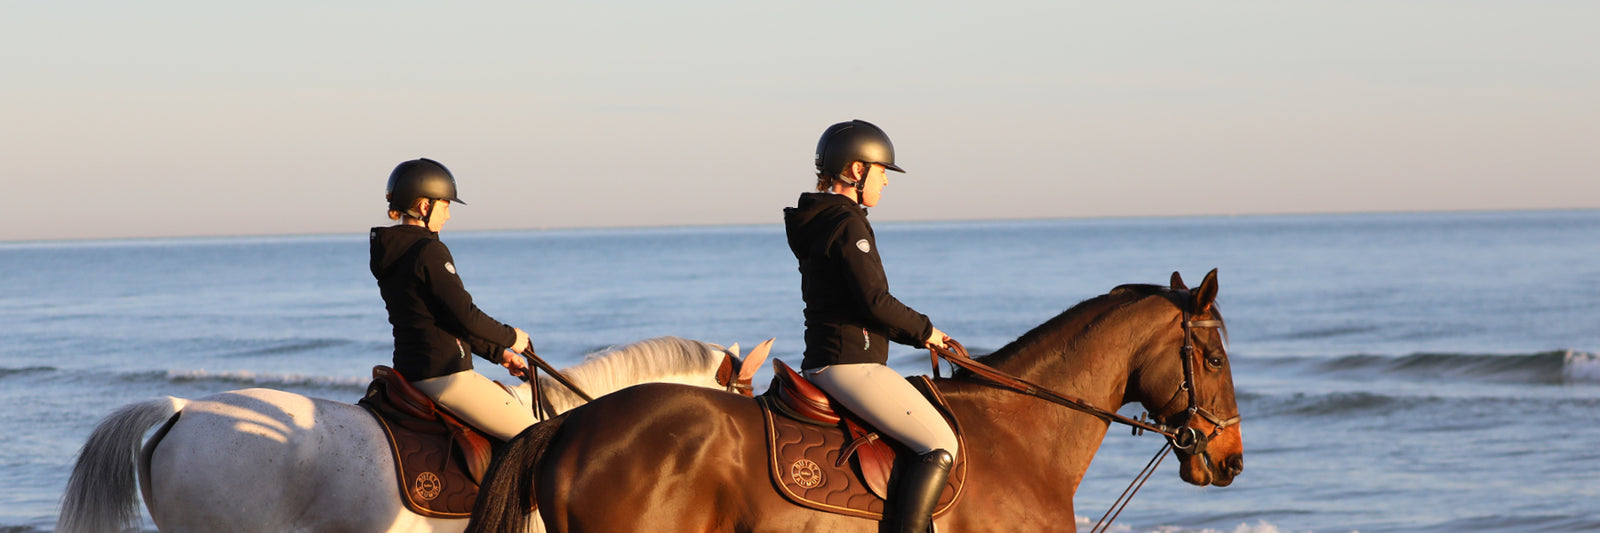 ForHorses  JULIE JUNIOR Leggings, Equestrian Wear - Shop For Horses